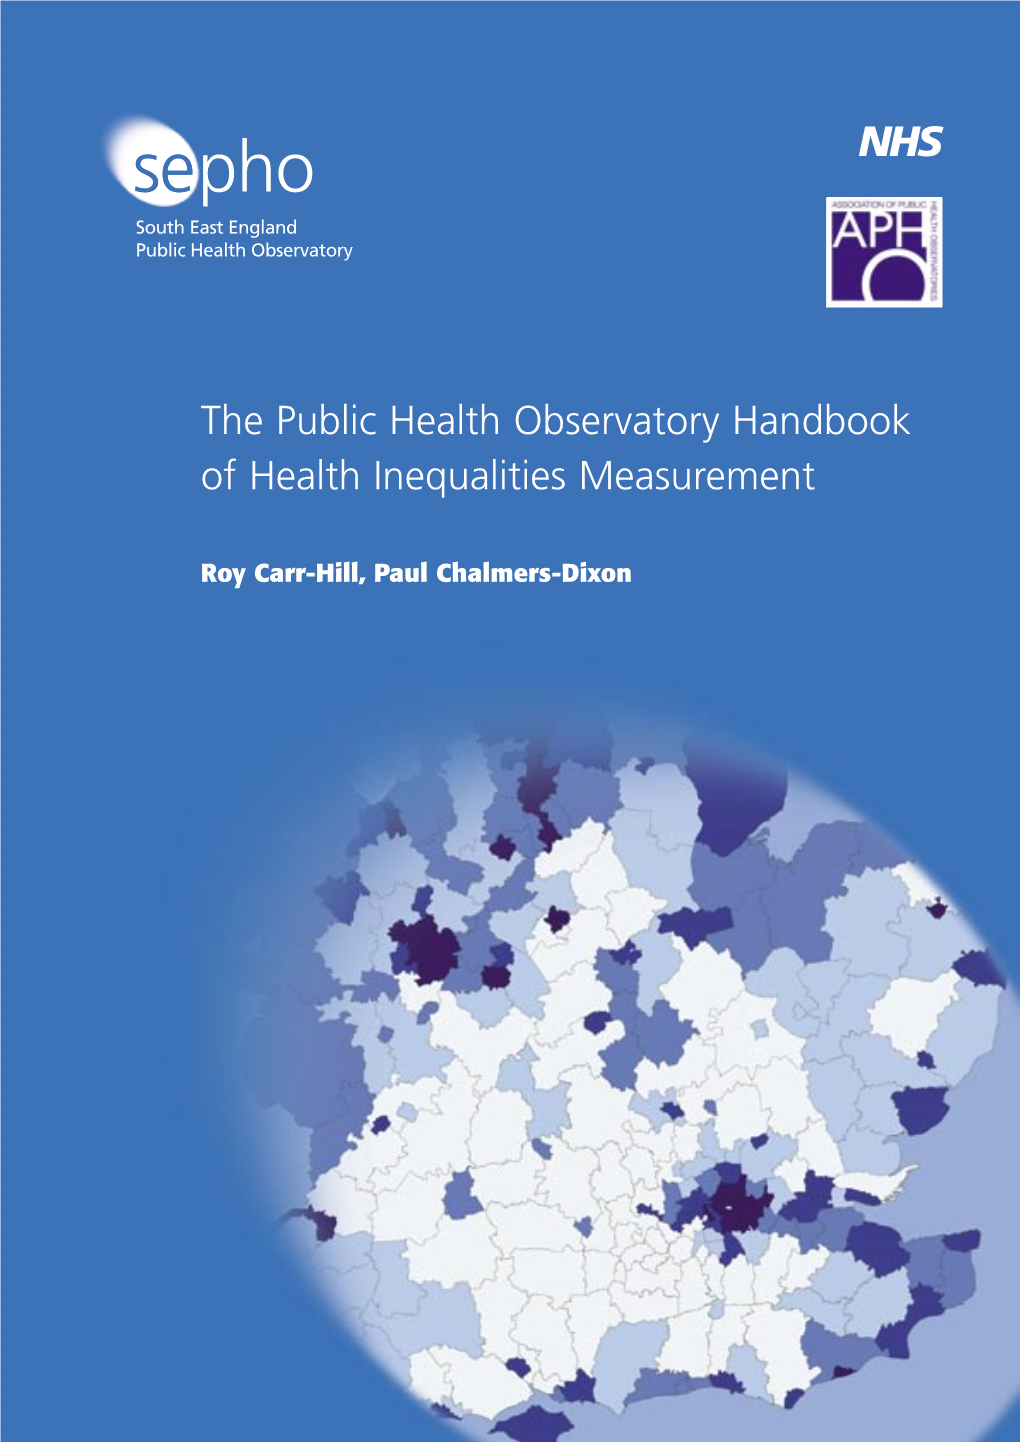 The Public Health Observatory Handbook of Health Inequalities Measurement